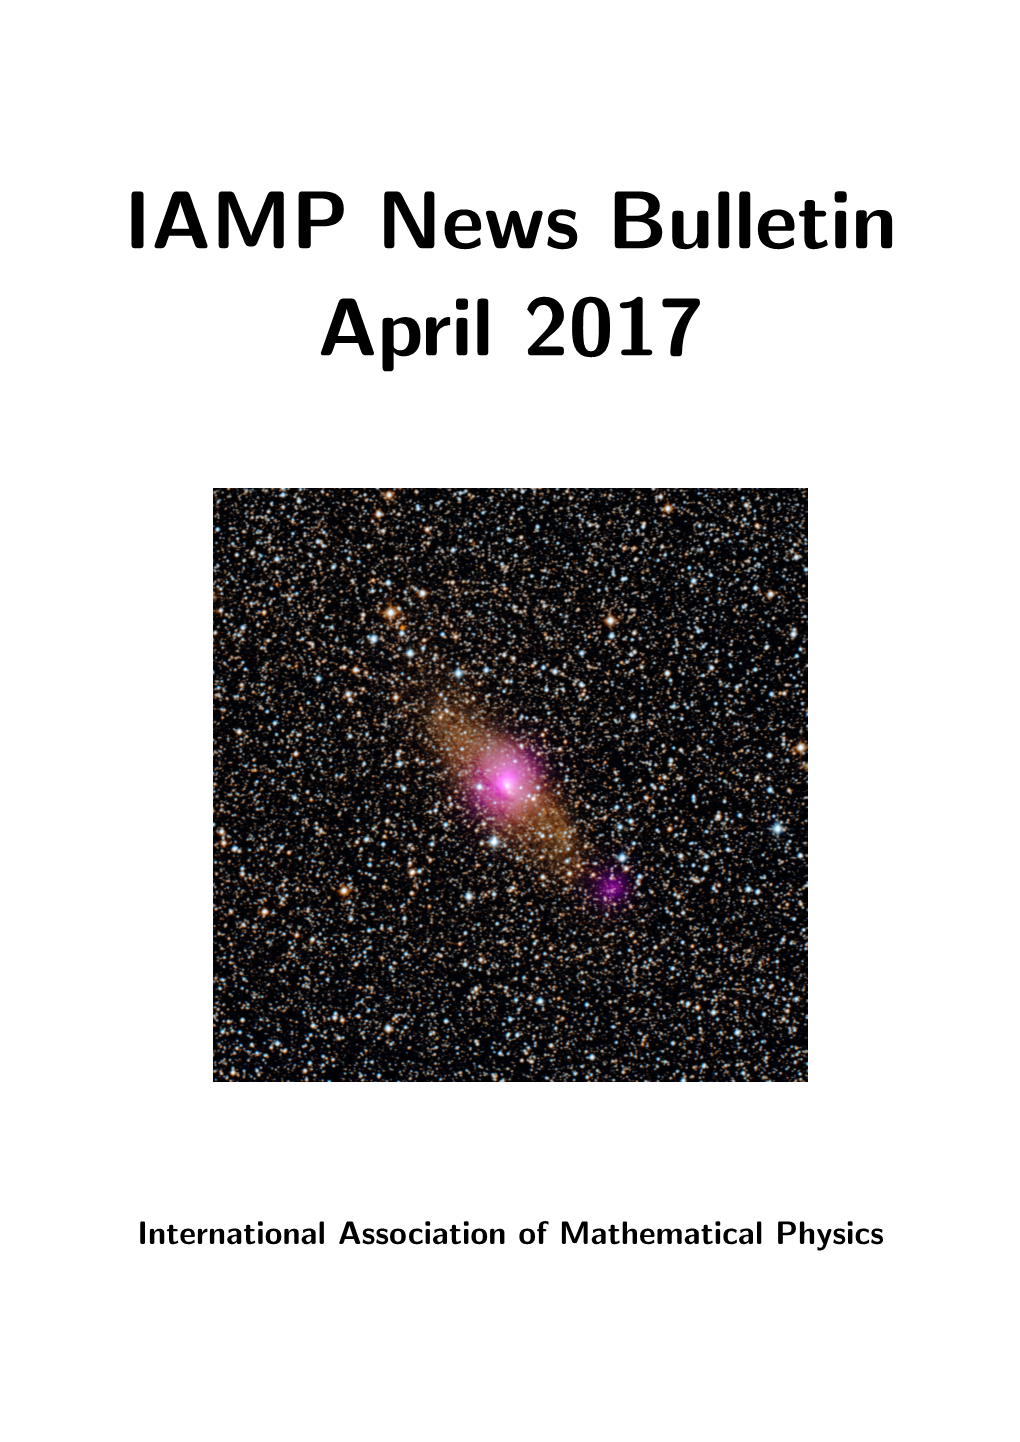 IAMP News Bulletin April 2017